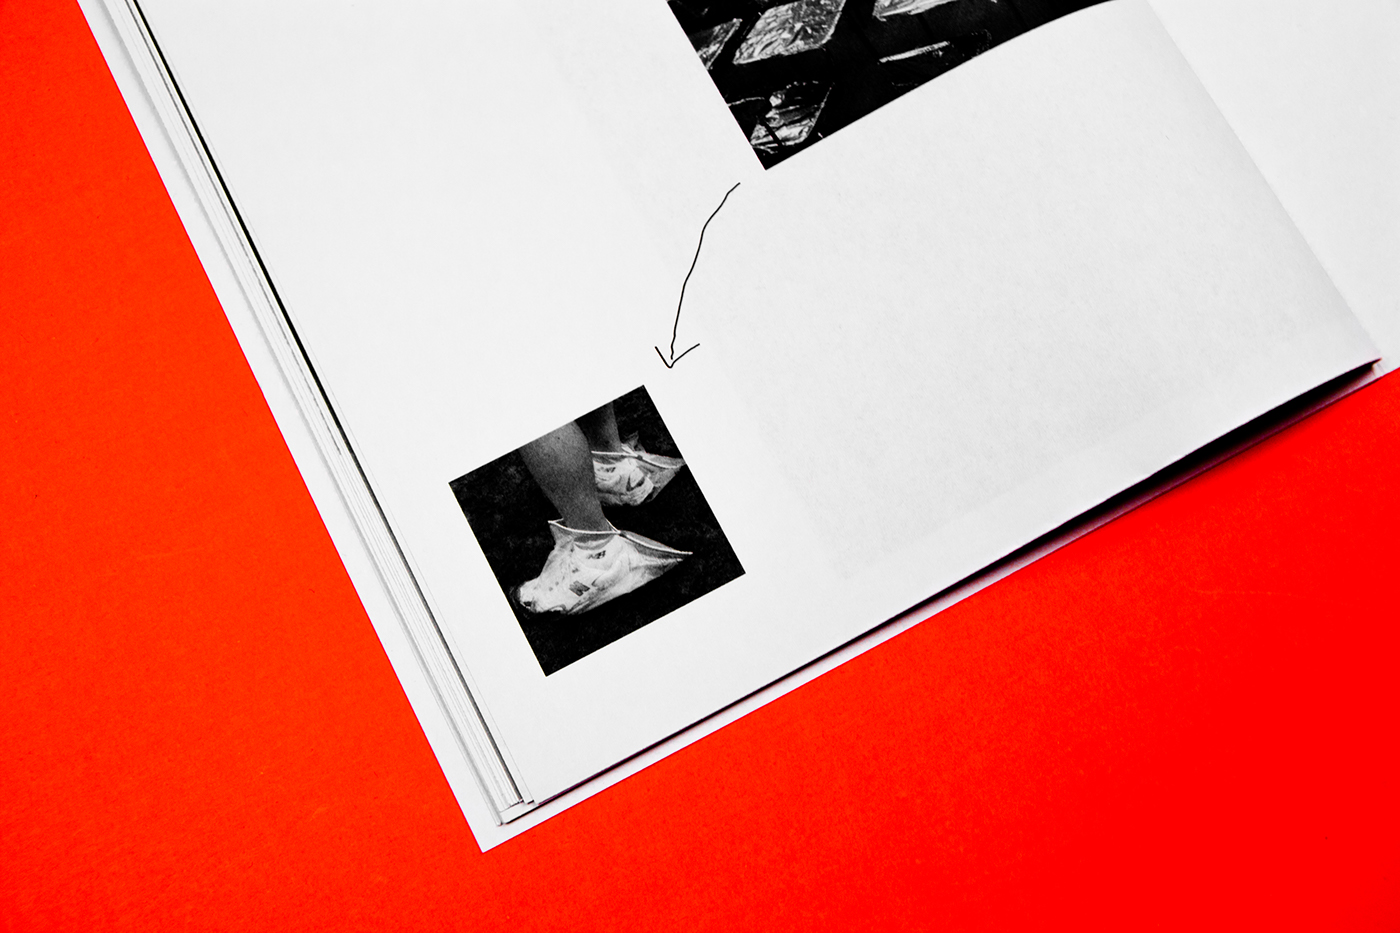 work in progress fanzine magazine typografi unknown Source Forsbergs Skola Forsbergs Sweden design paper neon minimal fluorescent Popping